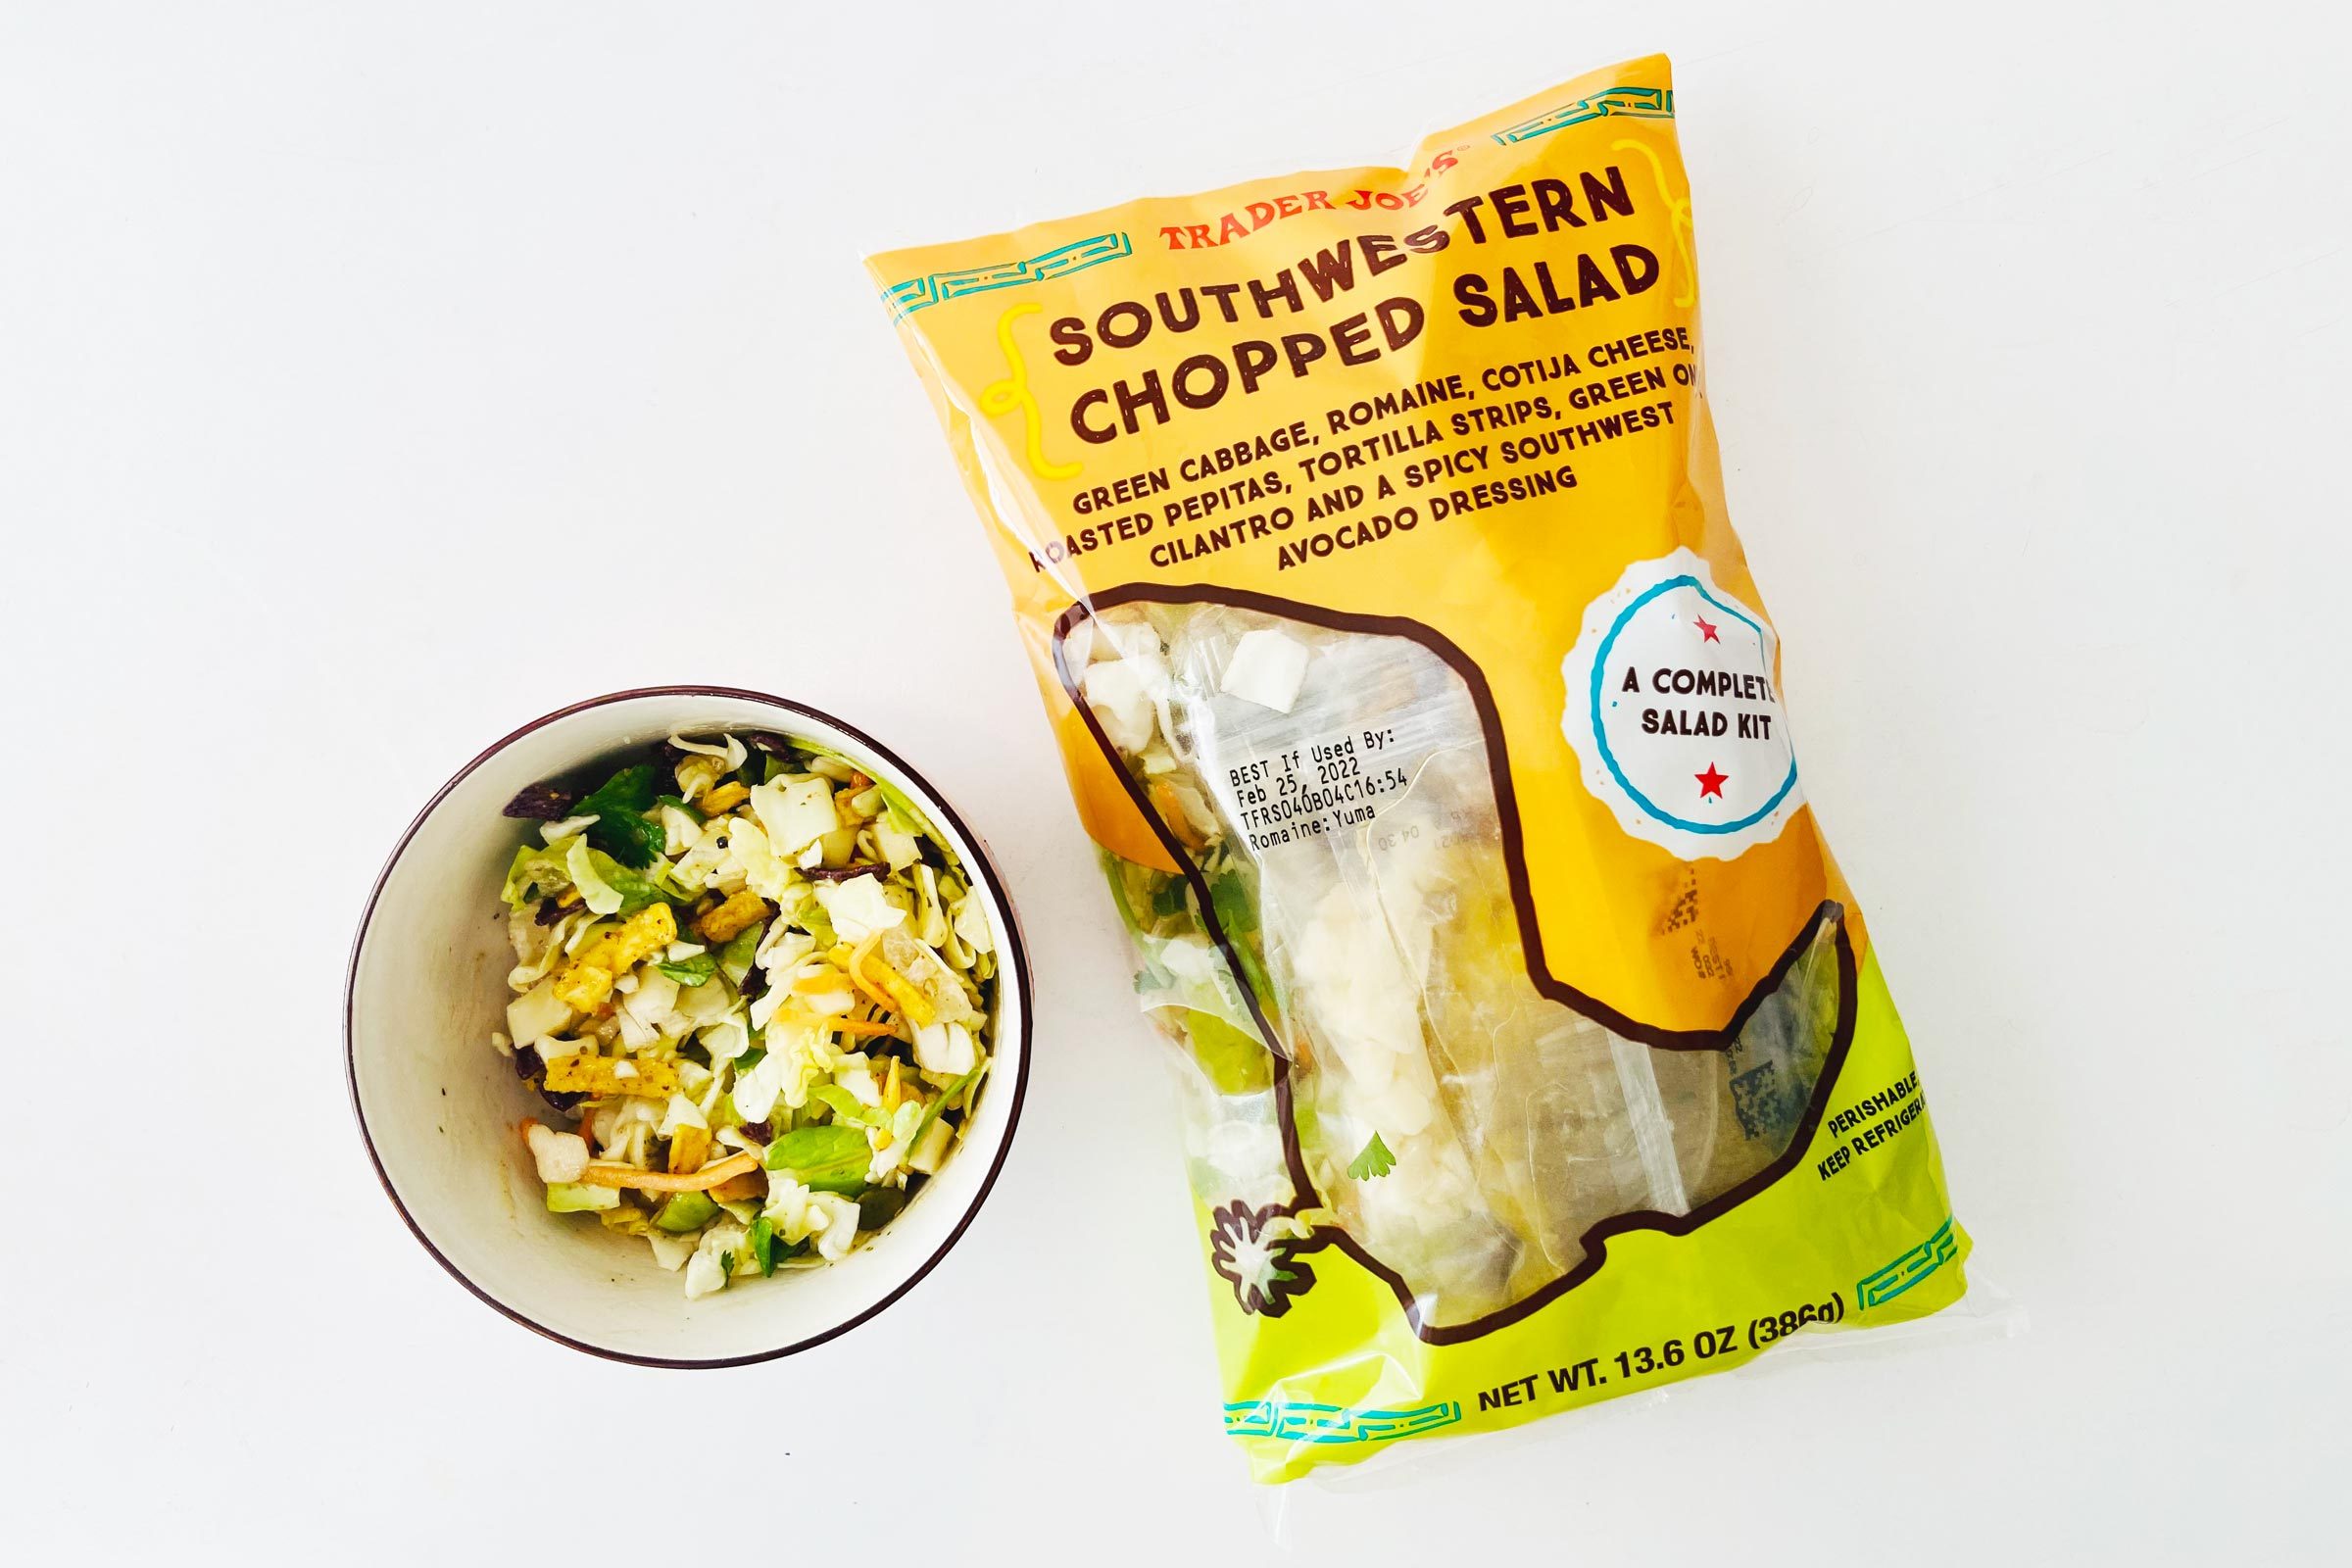 Best Salad Kits - Dole, Earthbound Farms